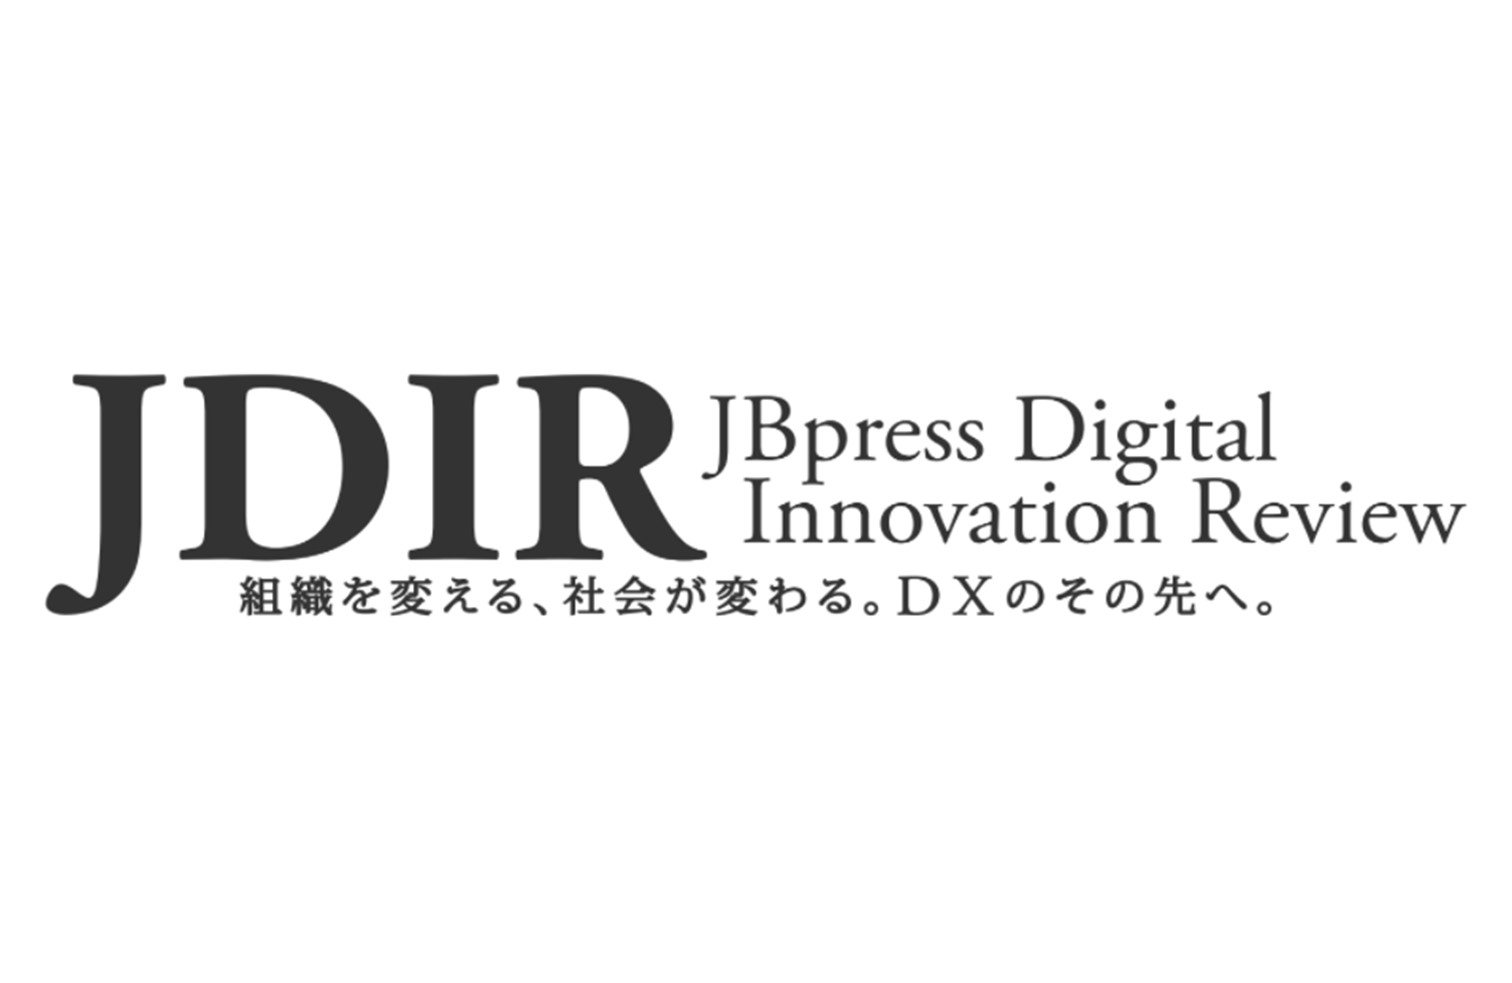 JDIR（JBpress Digital Innovation Review）